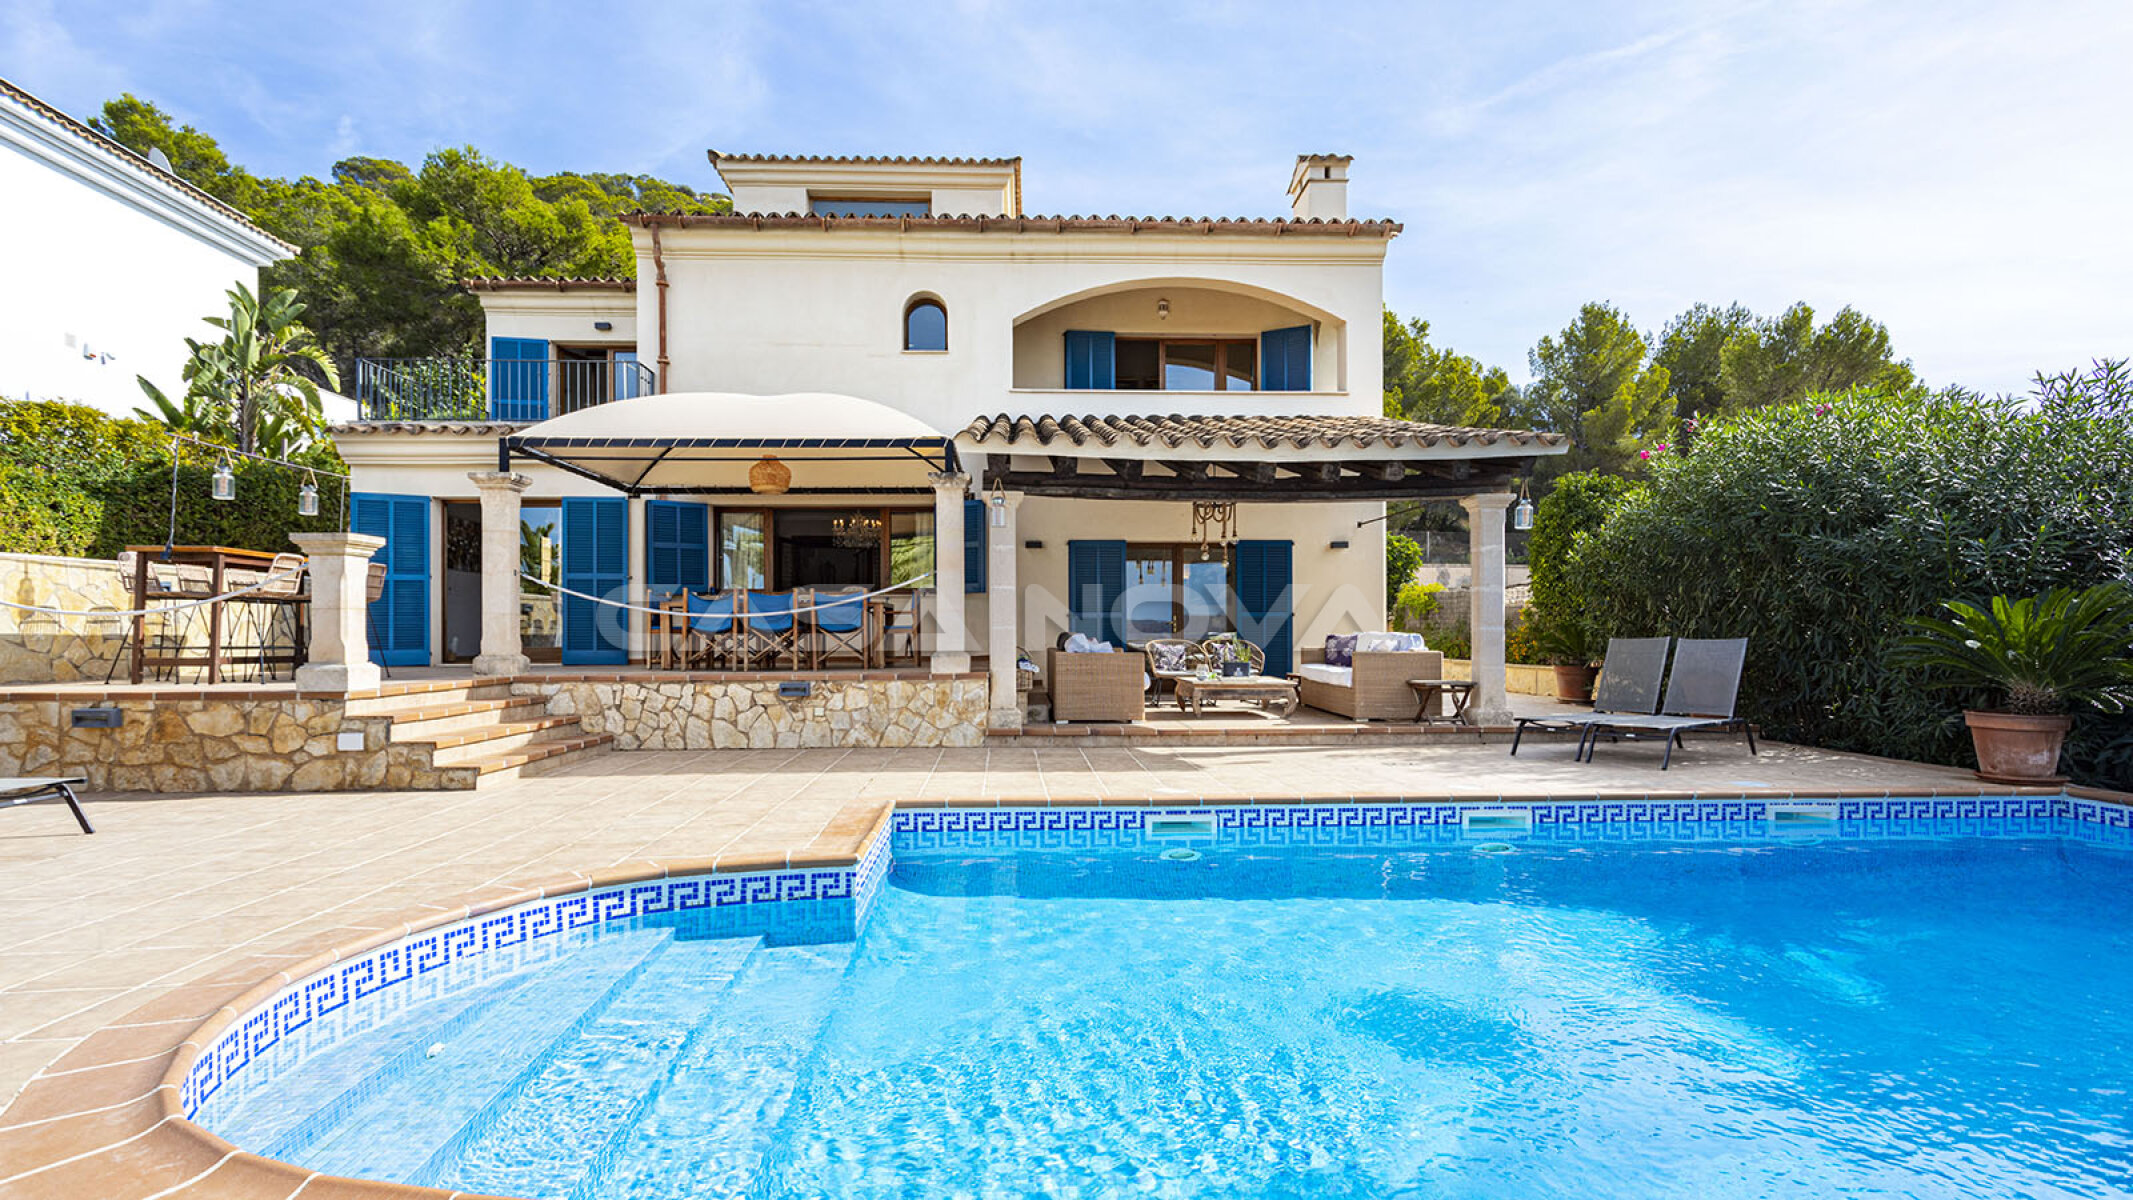 Mediterranean dream villa with sea view and vacation rental license